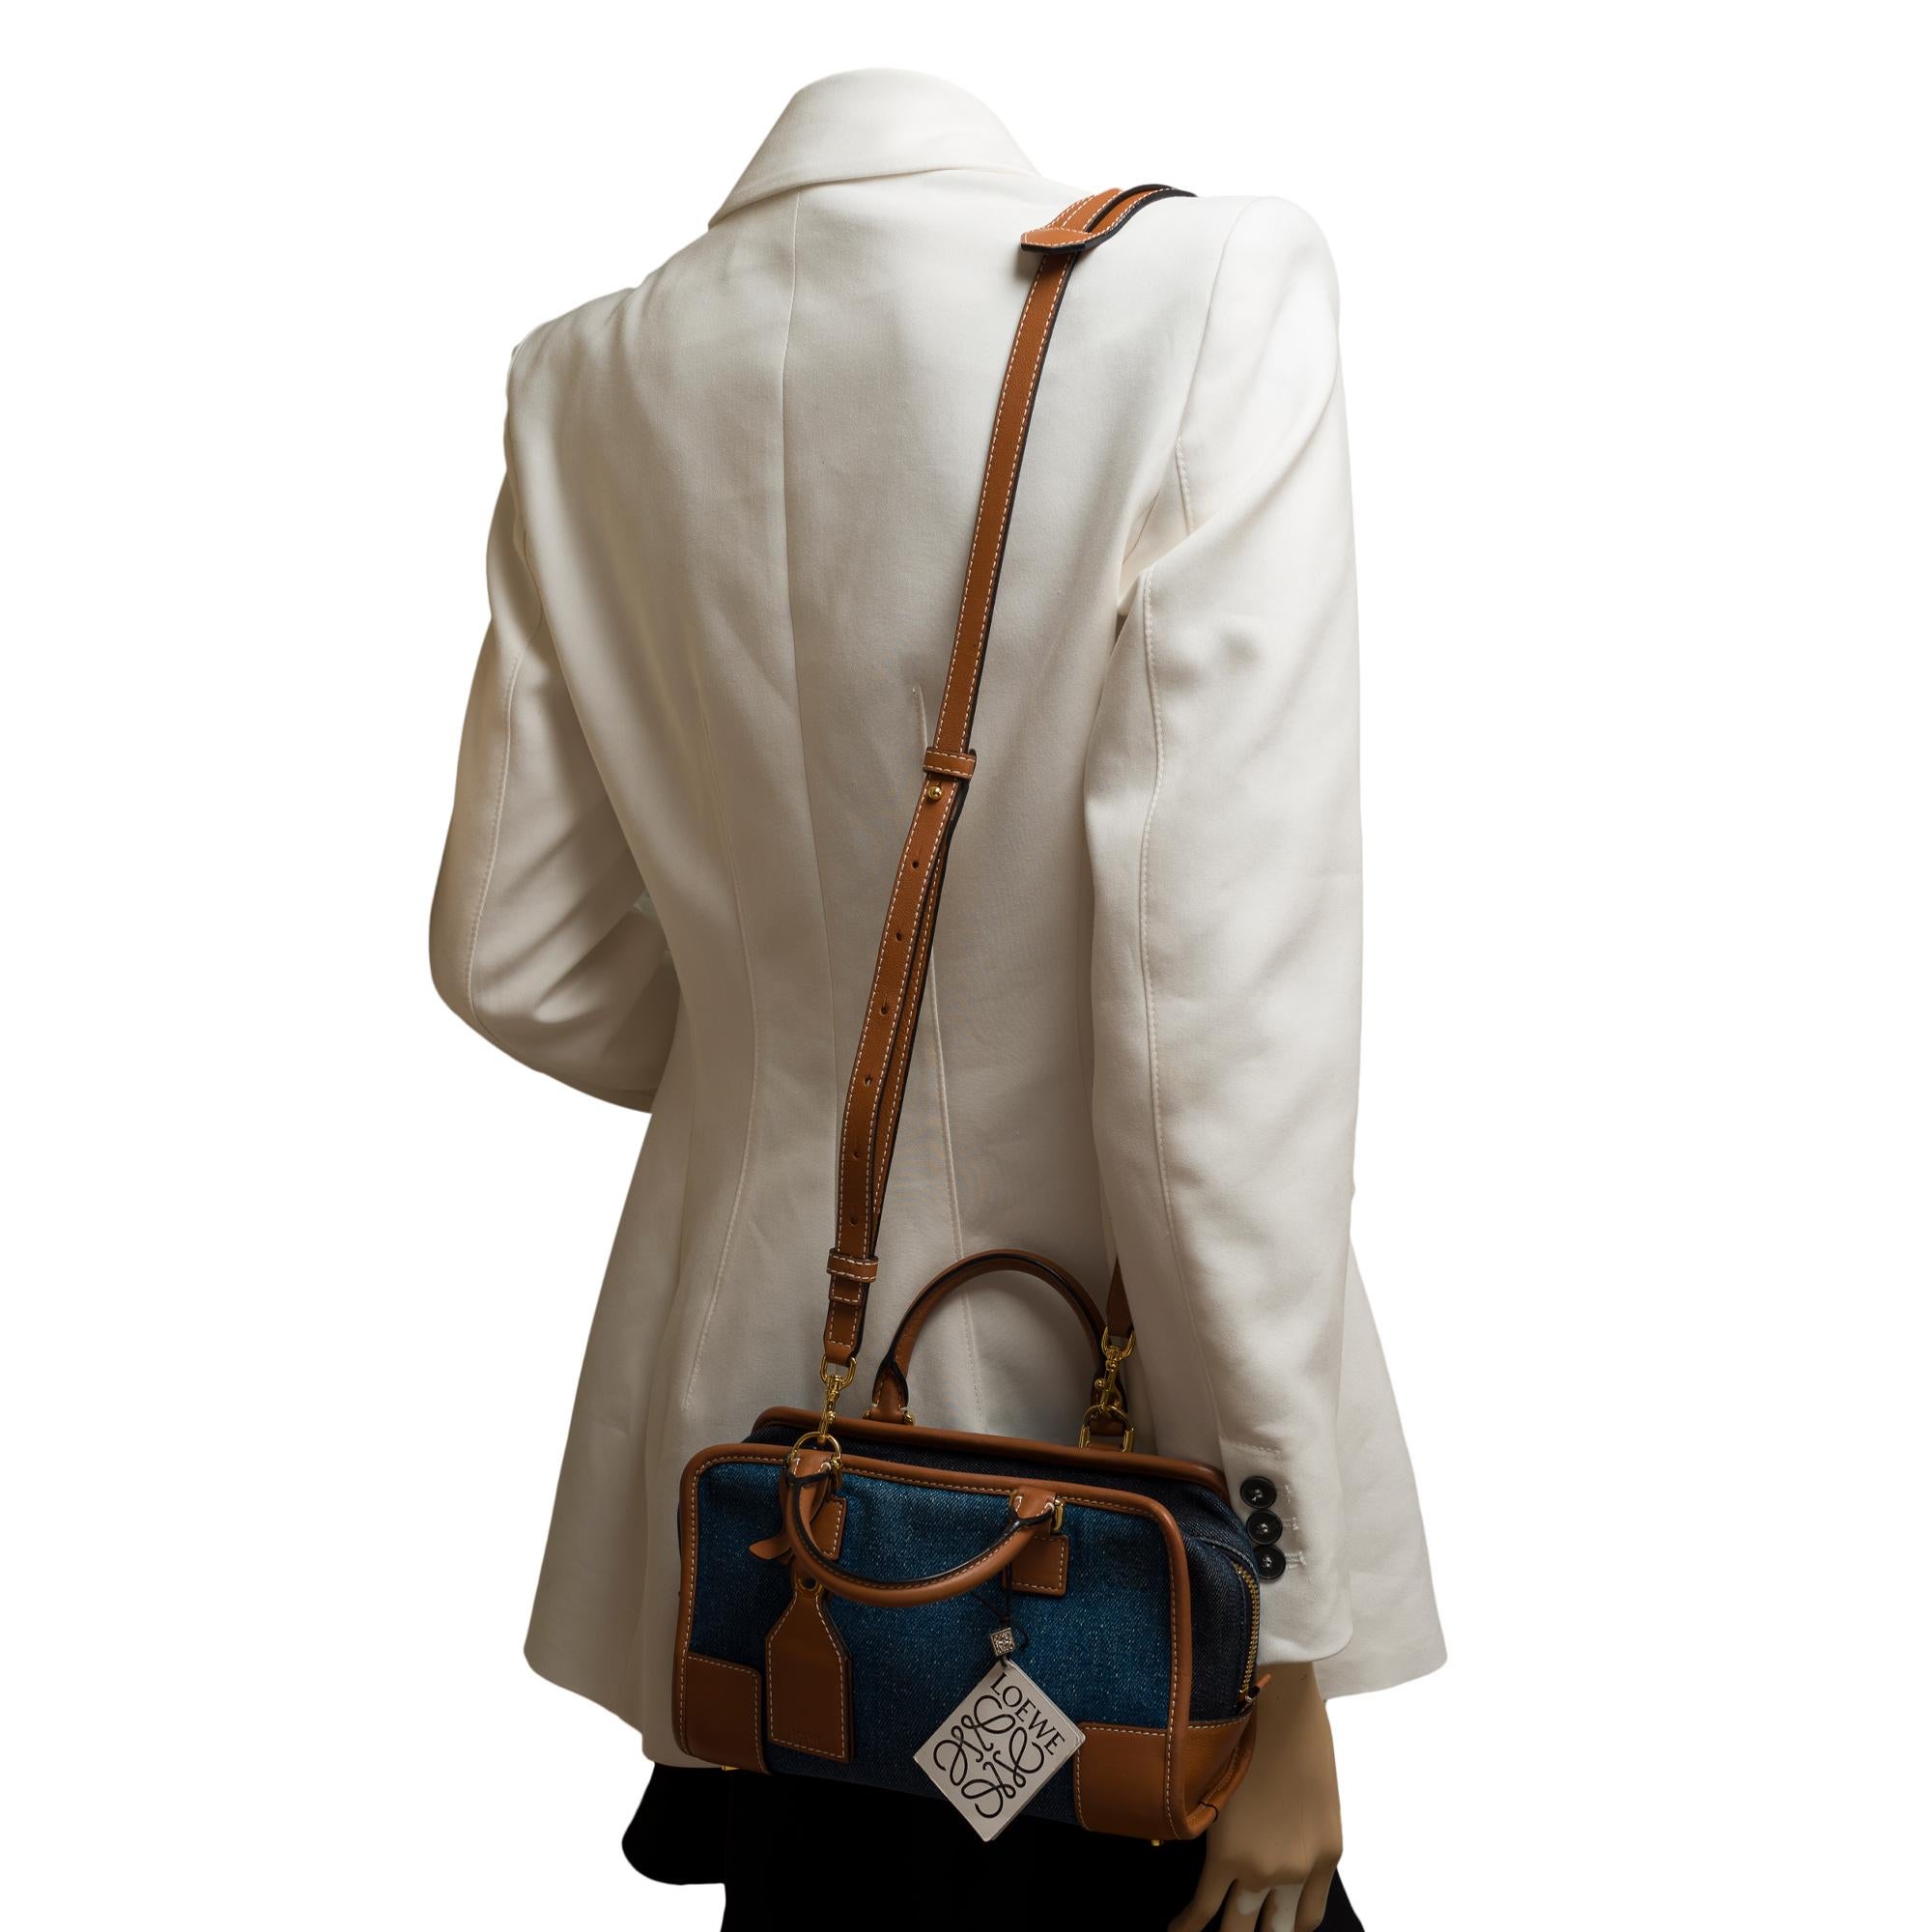 Loewe Amazona 23 2 Way handbag in denim and brown leather, GHW 8